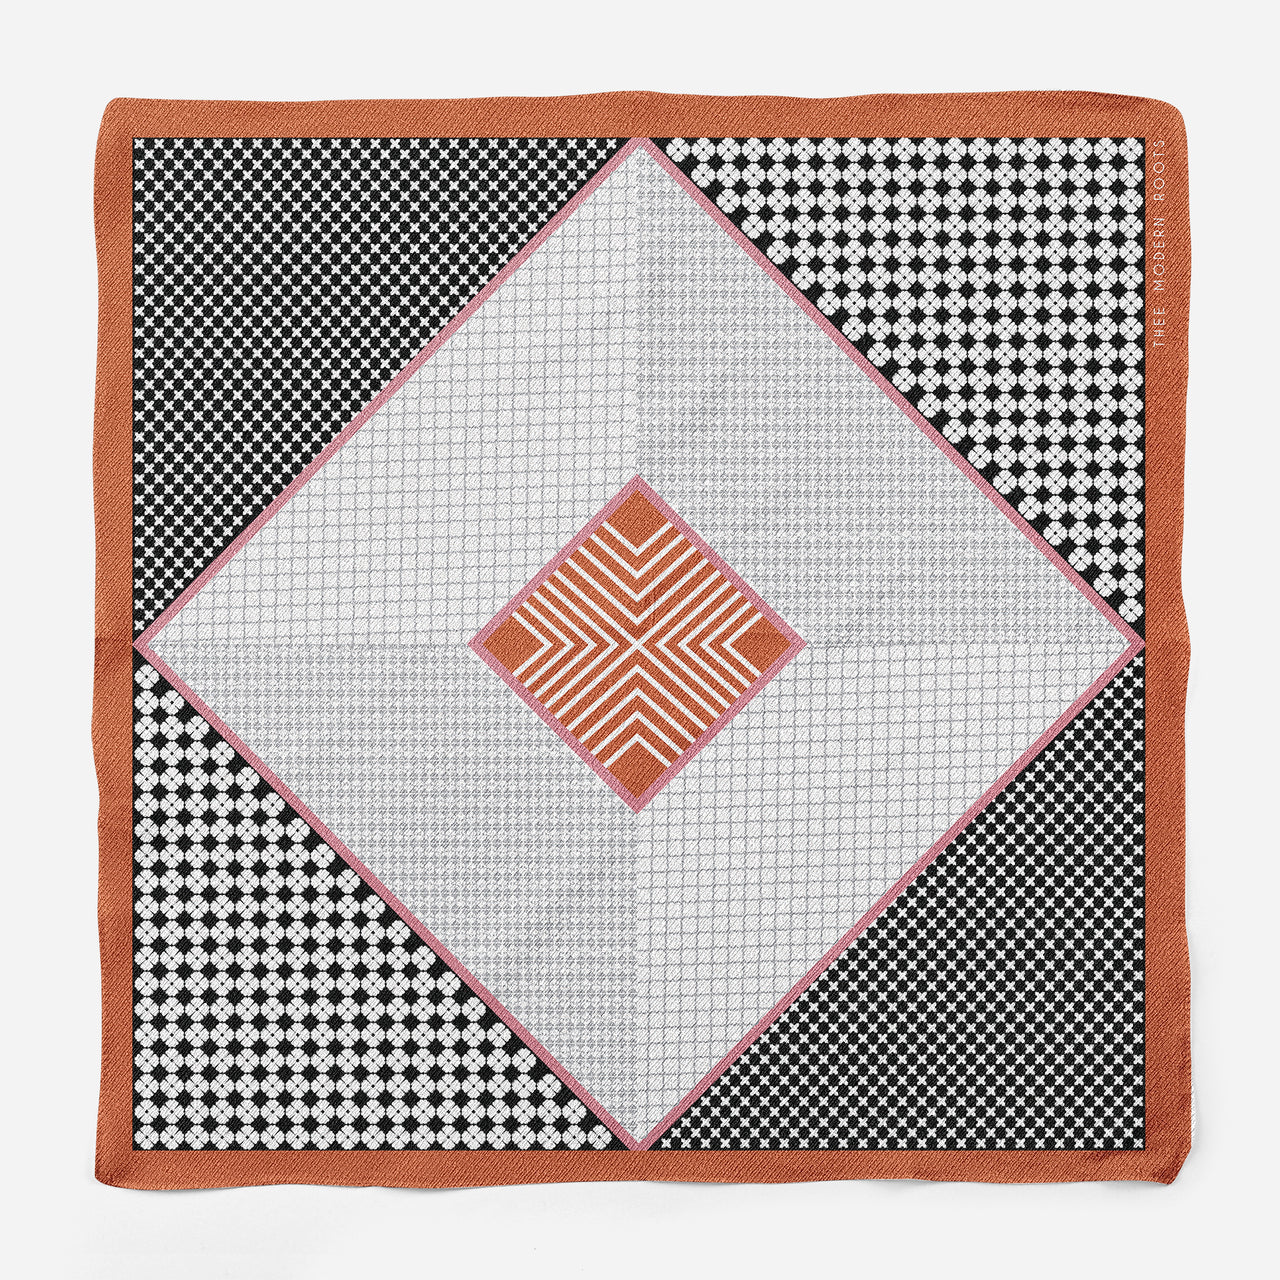 Handmade men's luxury pocket squares